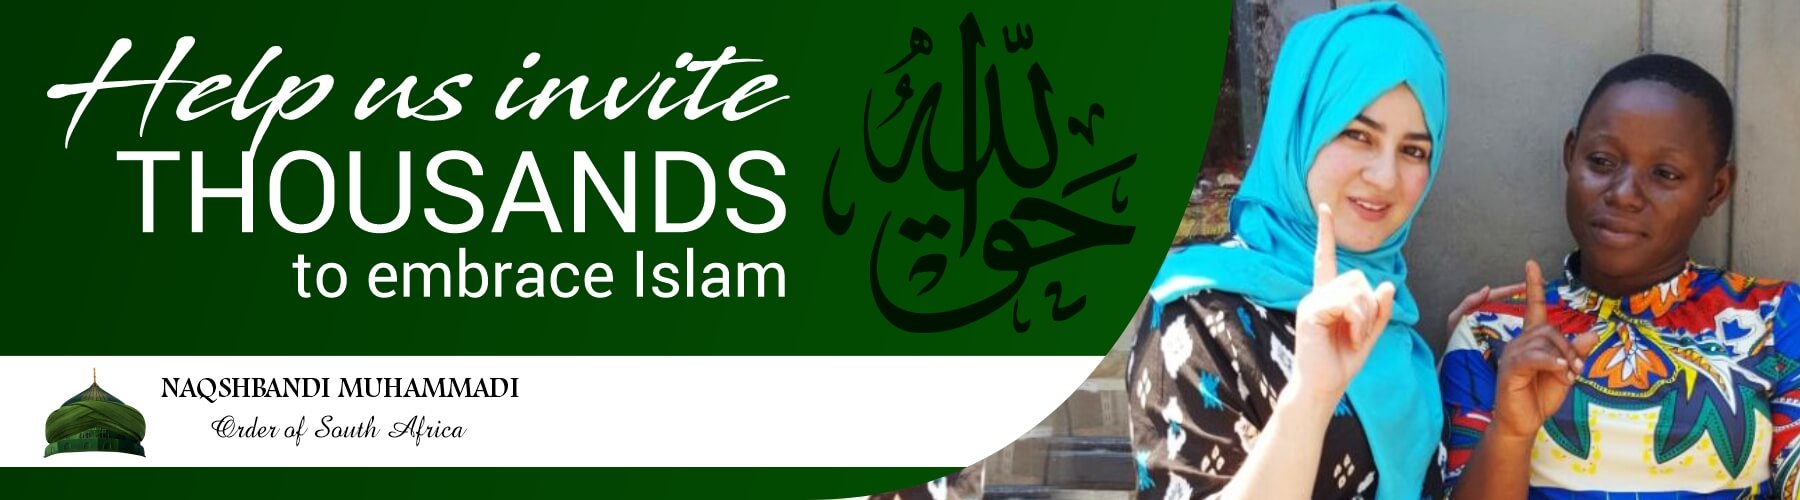 Islam-banner